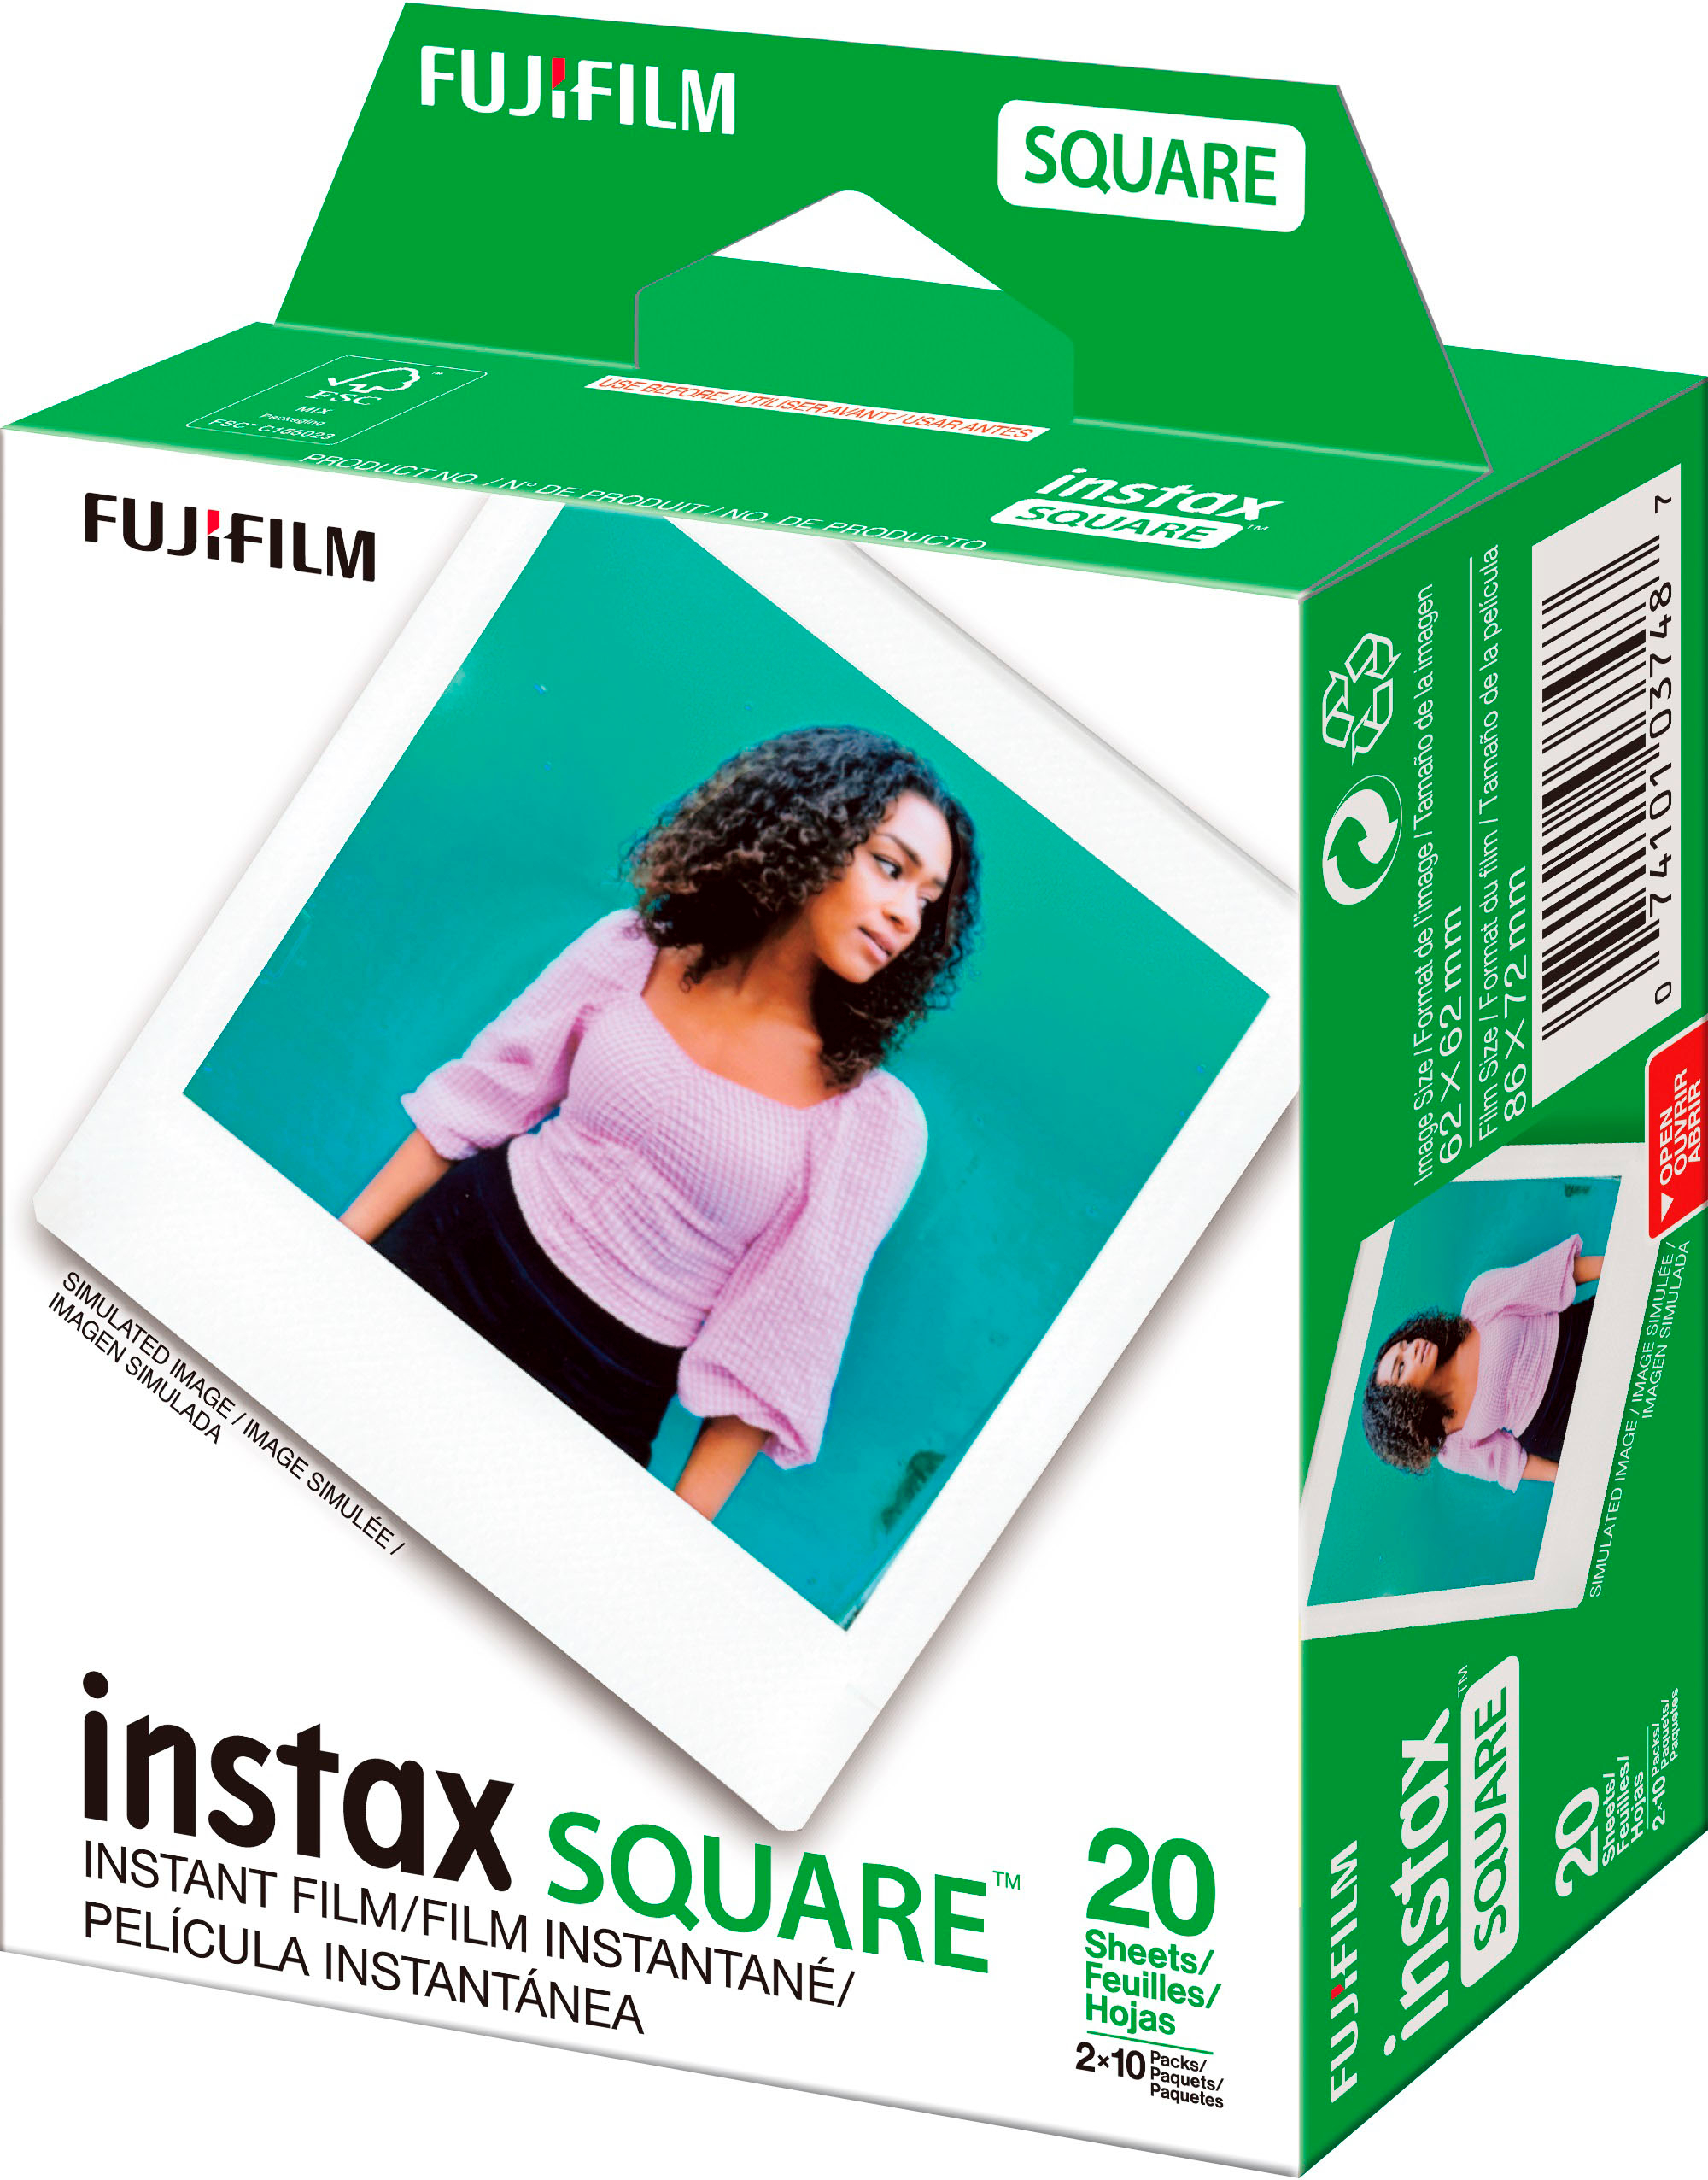 FUJIFILM INSTAX SQUARE - Recharge 10x Films